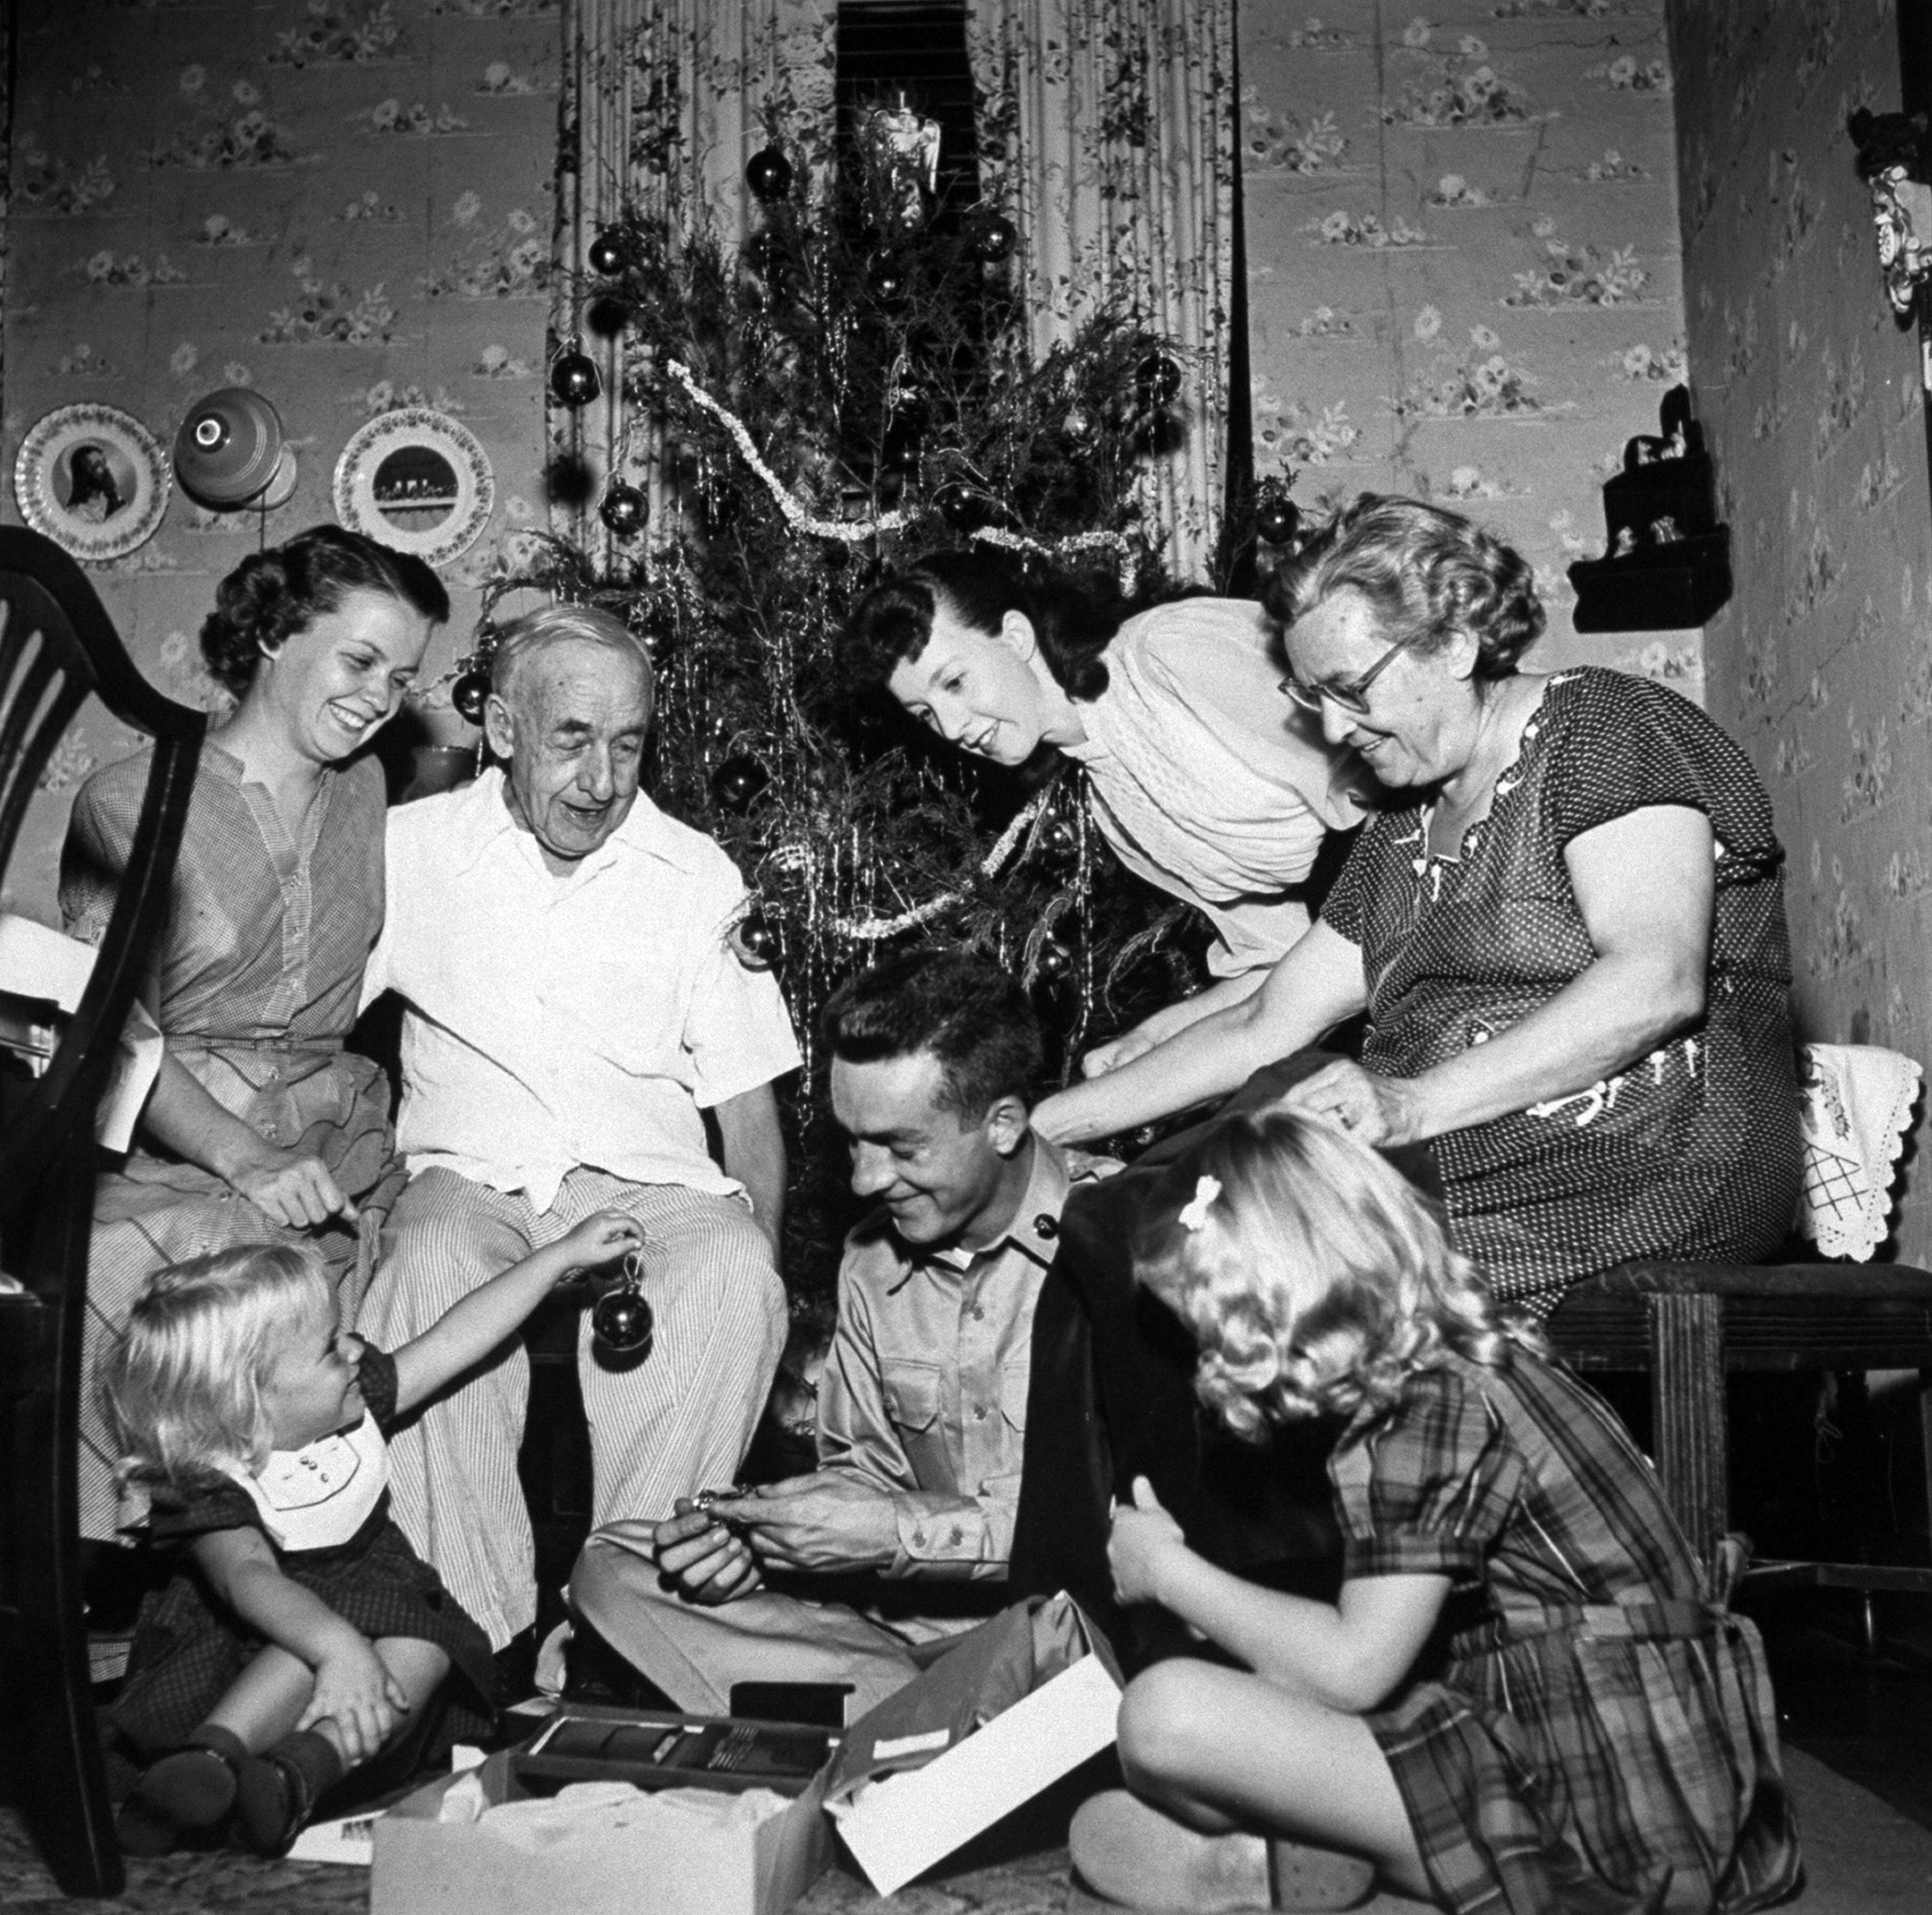 A family celebrating Christmas, 1953.